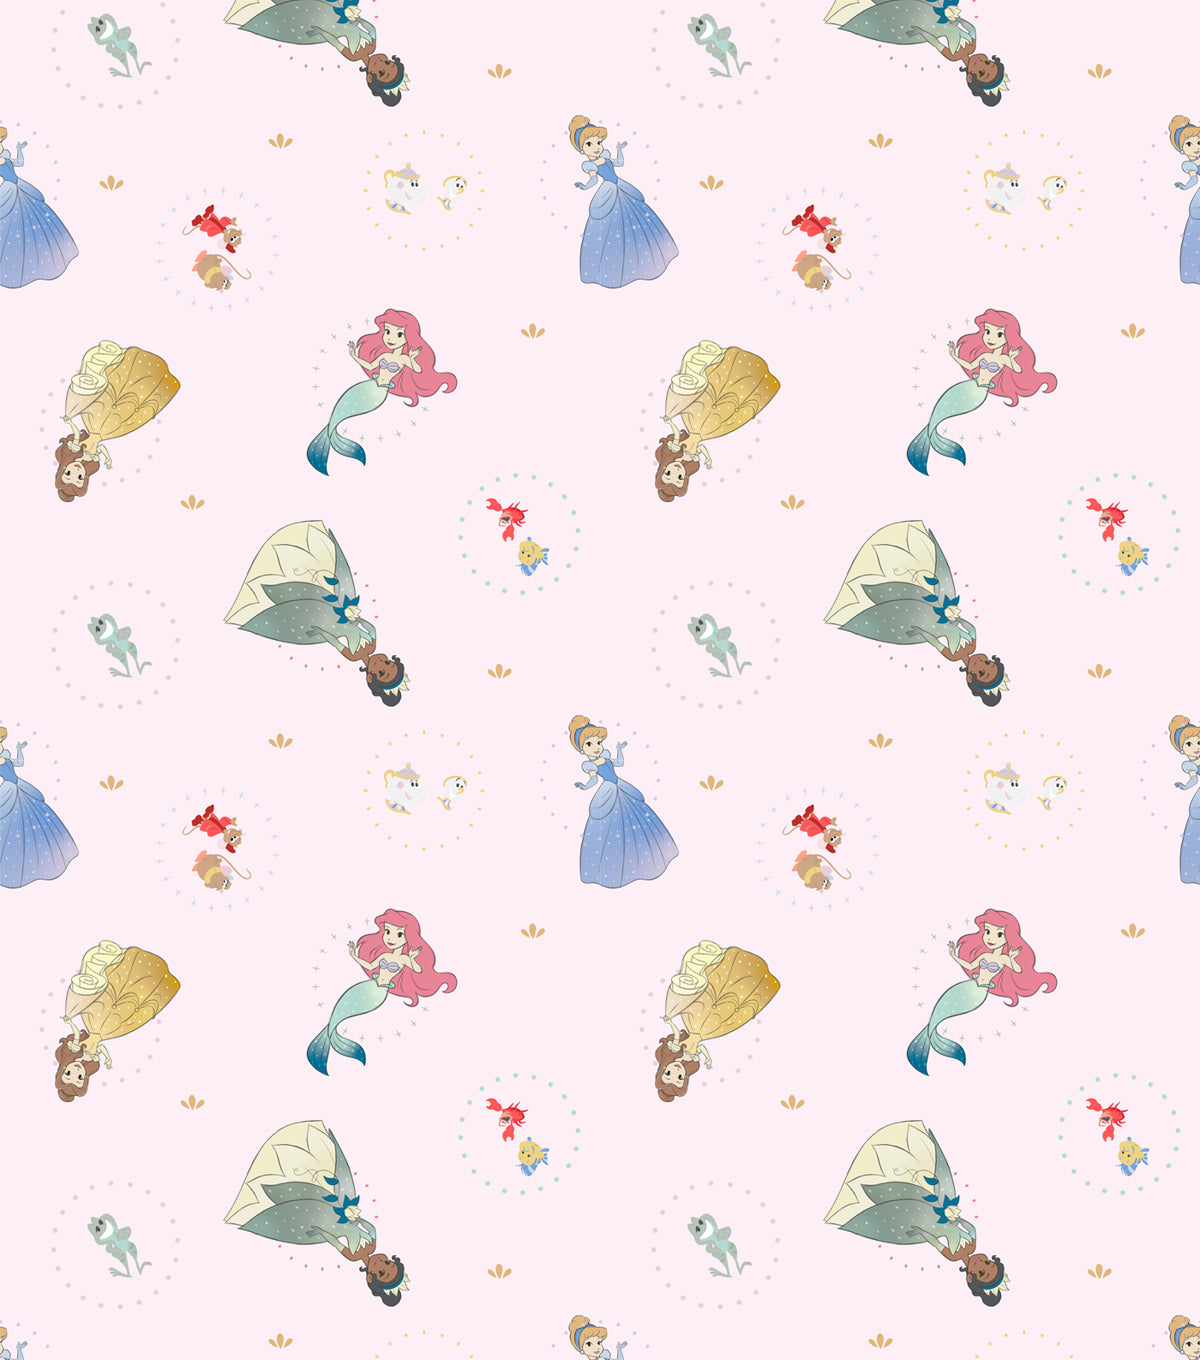 Disney Princess Characters & Animal Friends Cotton Fabric